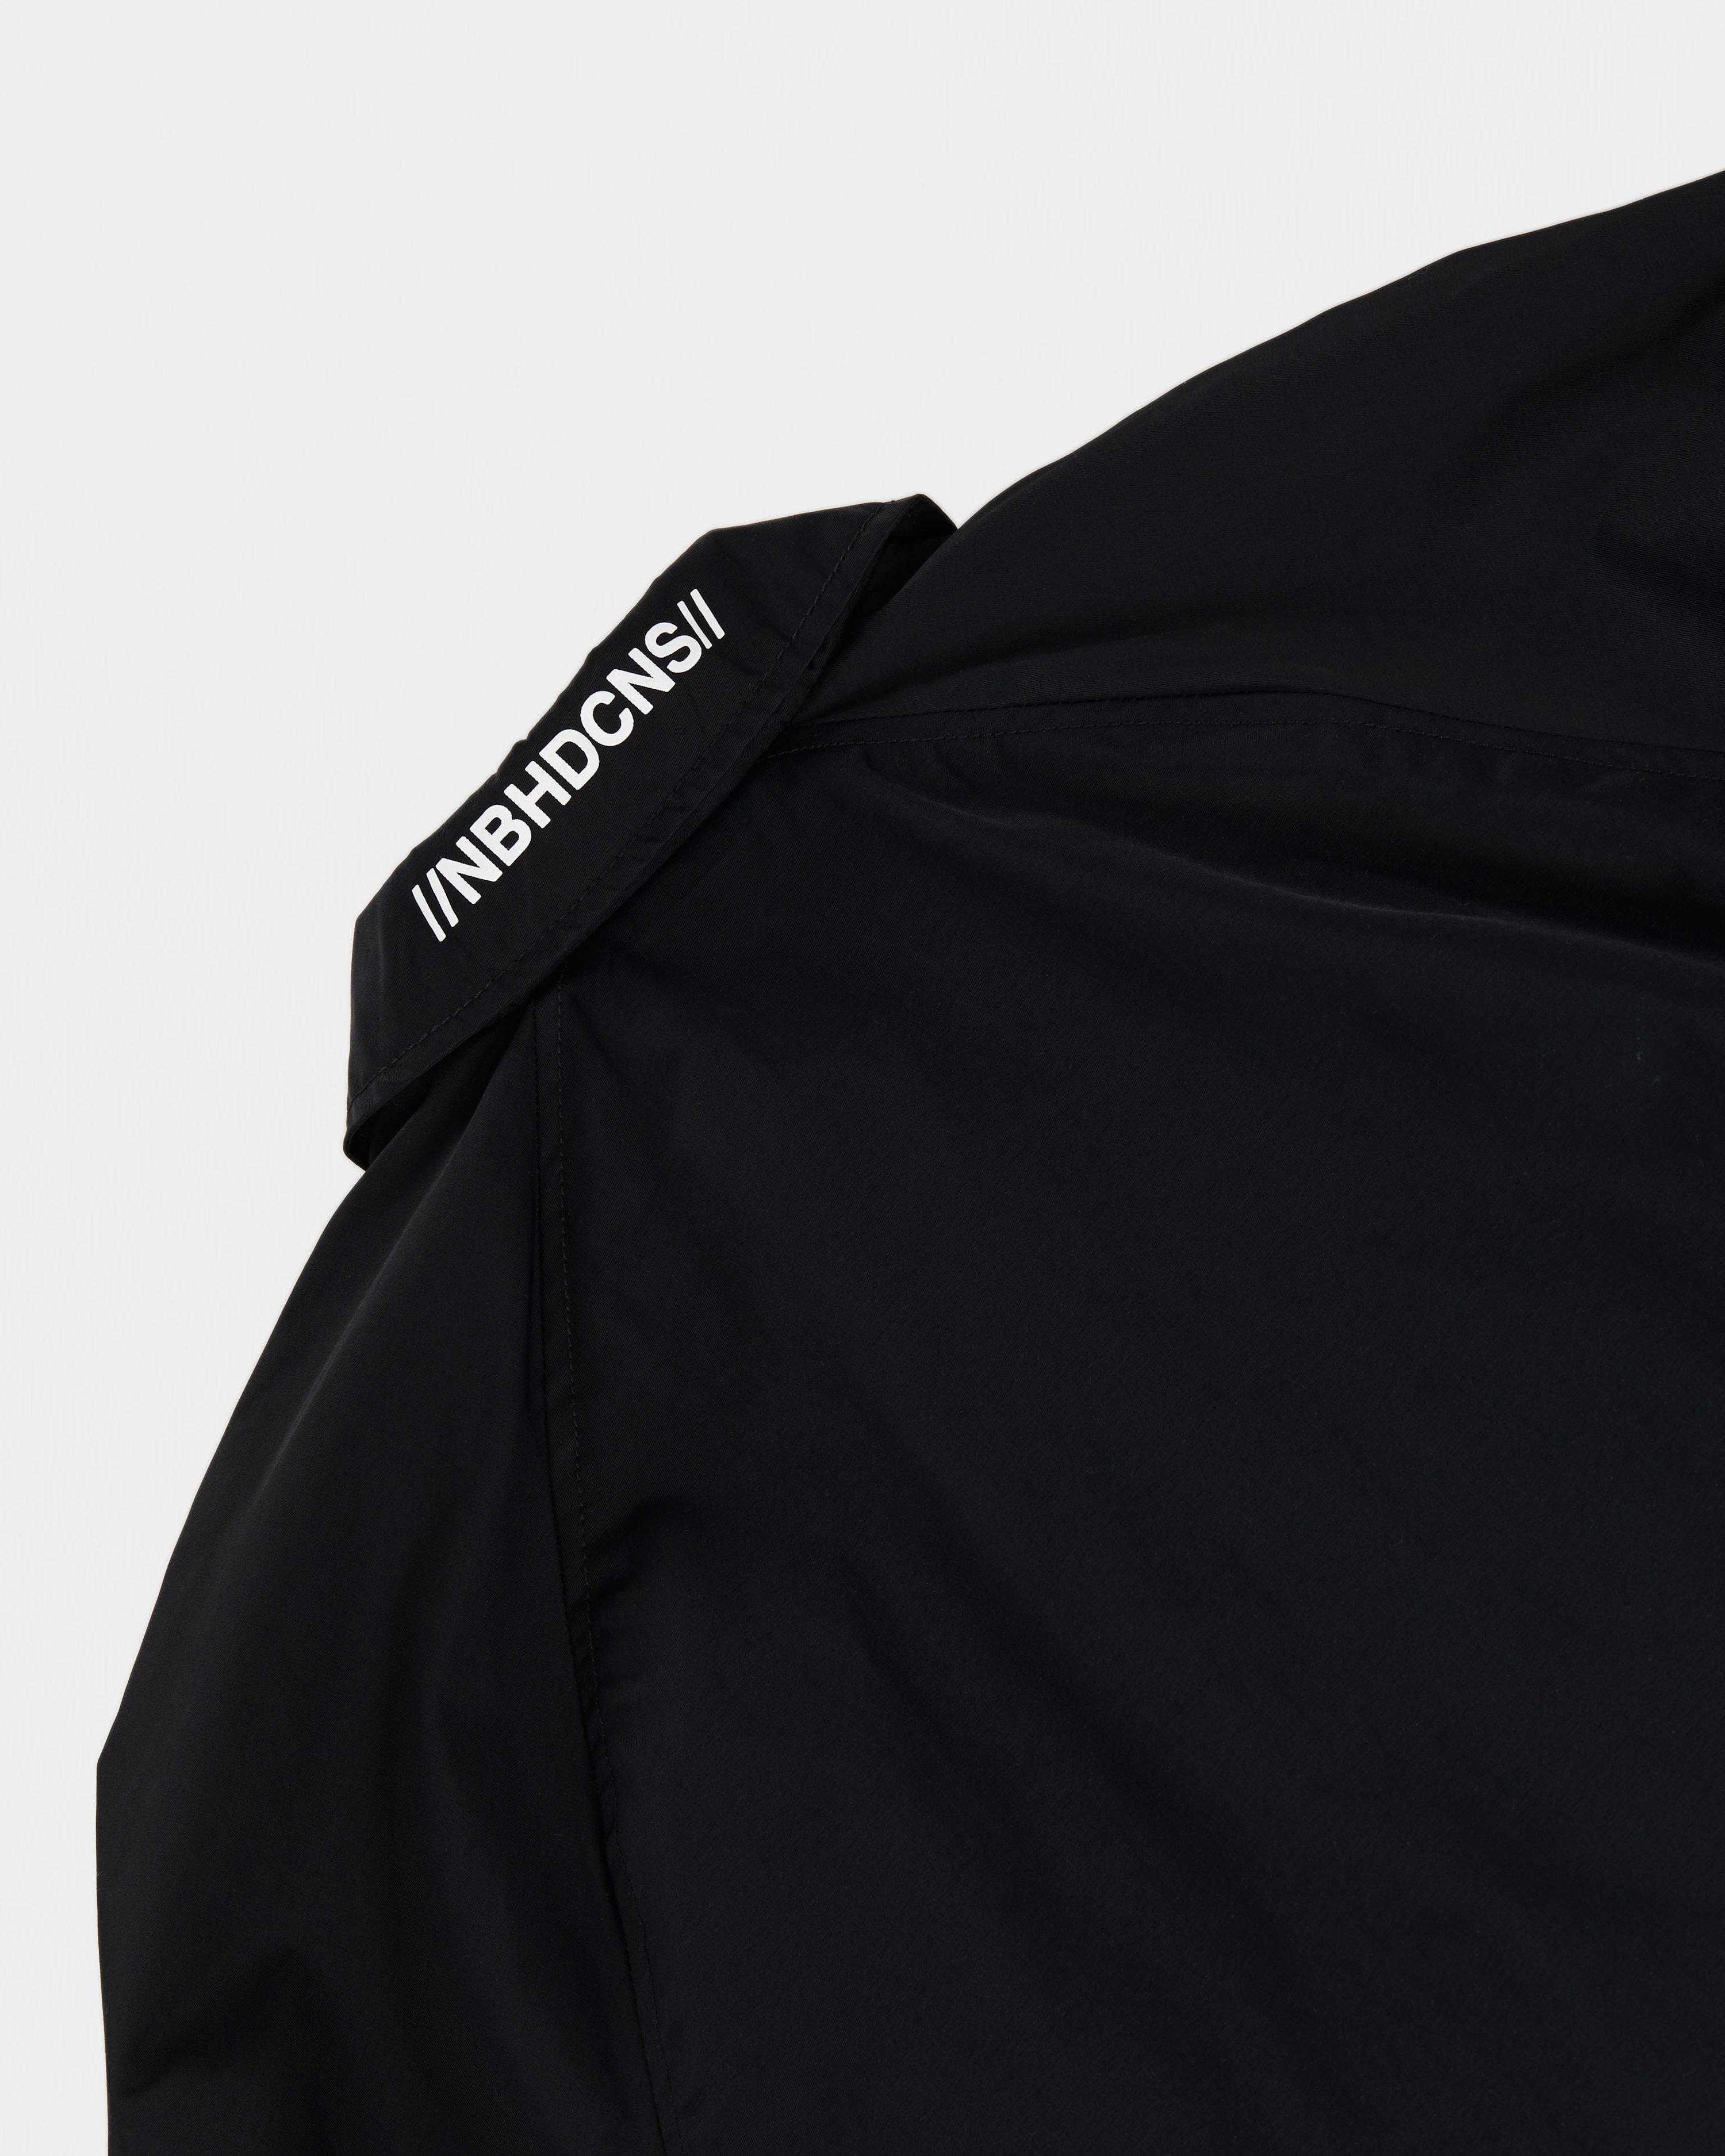 Converse x NBHD - Black Coaches Jacket - Clothing - Black - Image 4